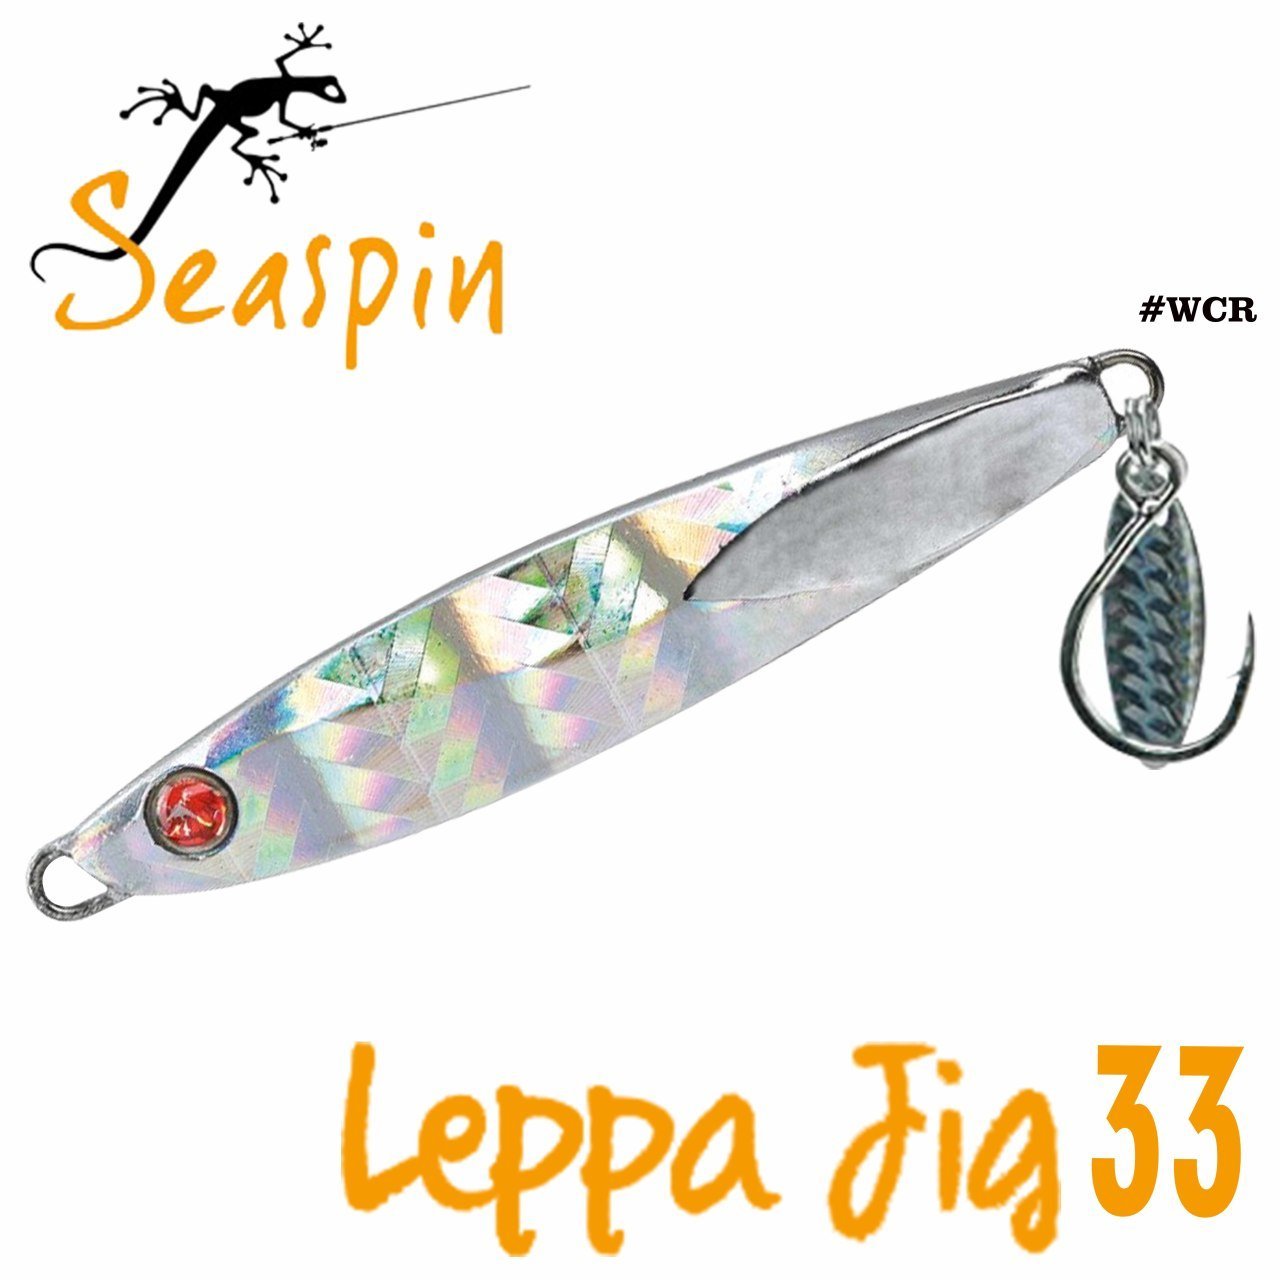 Seaspin Leppa 33gr jig yem #WCR